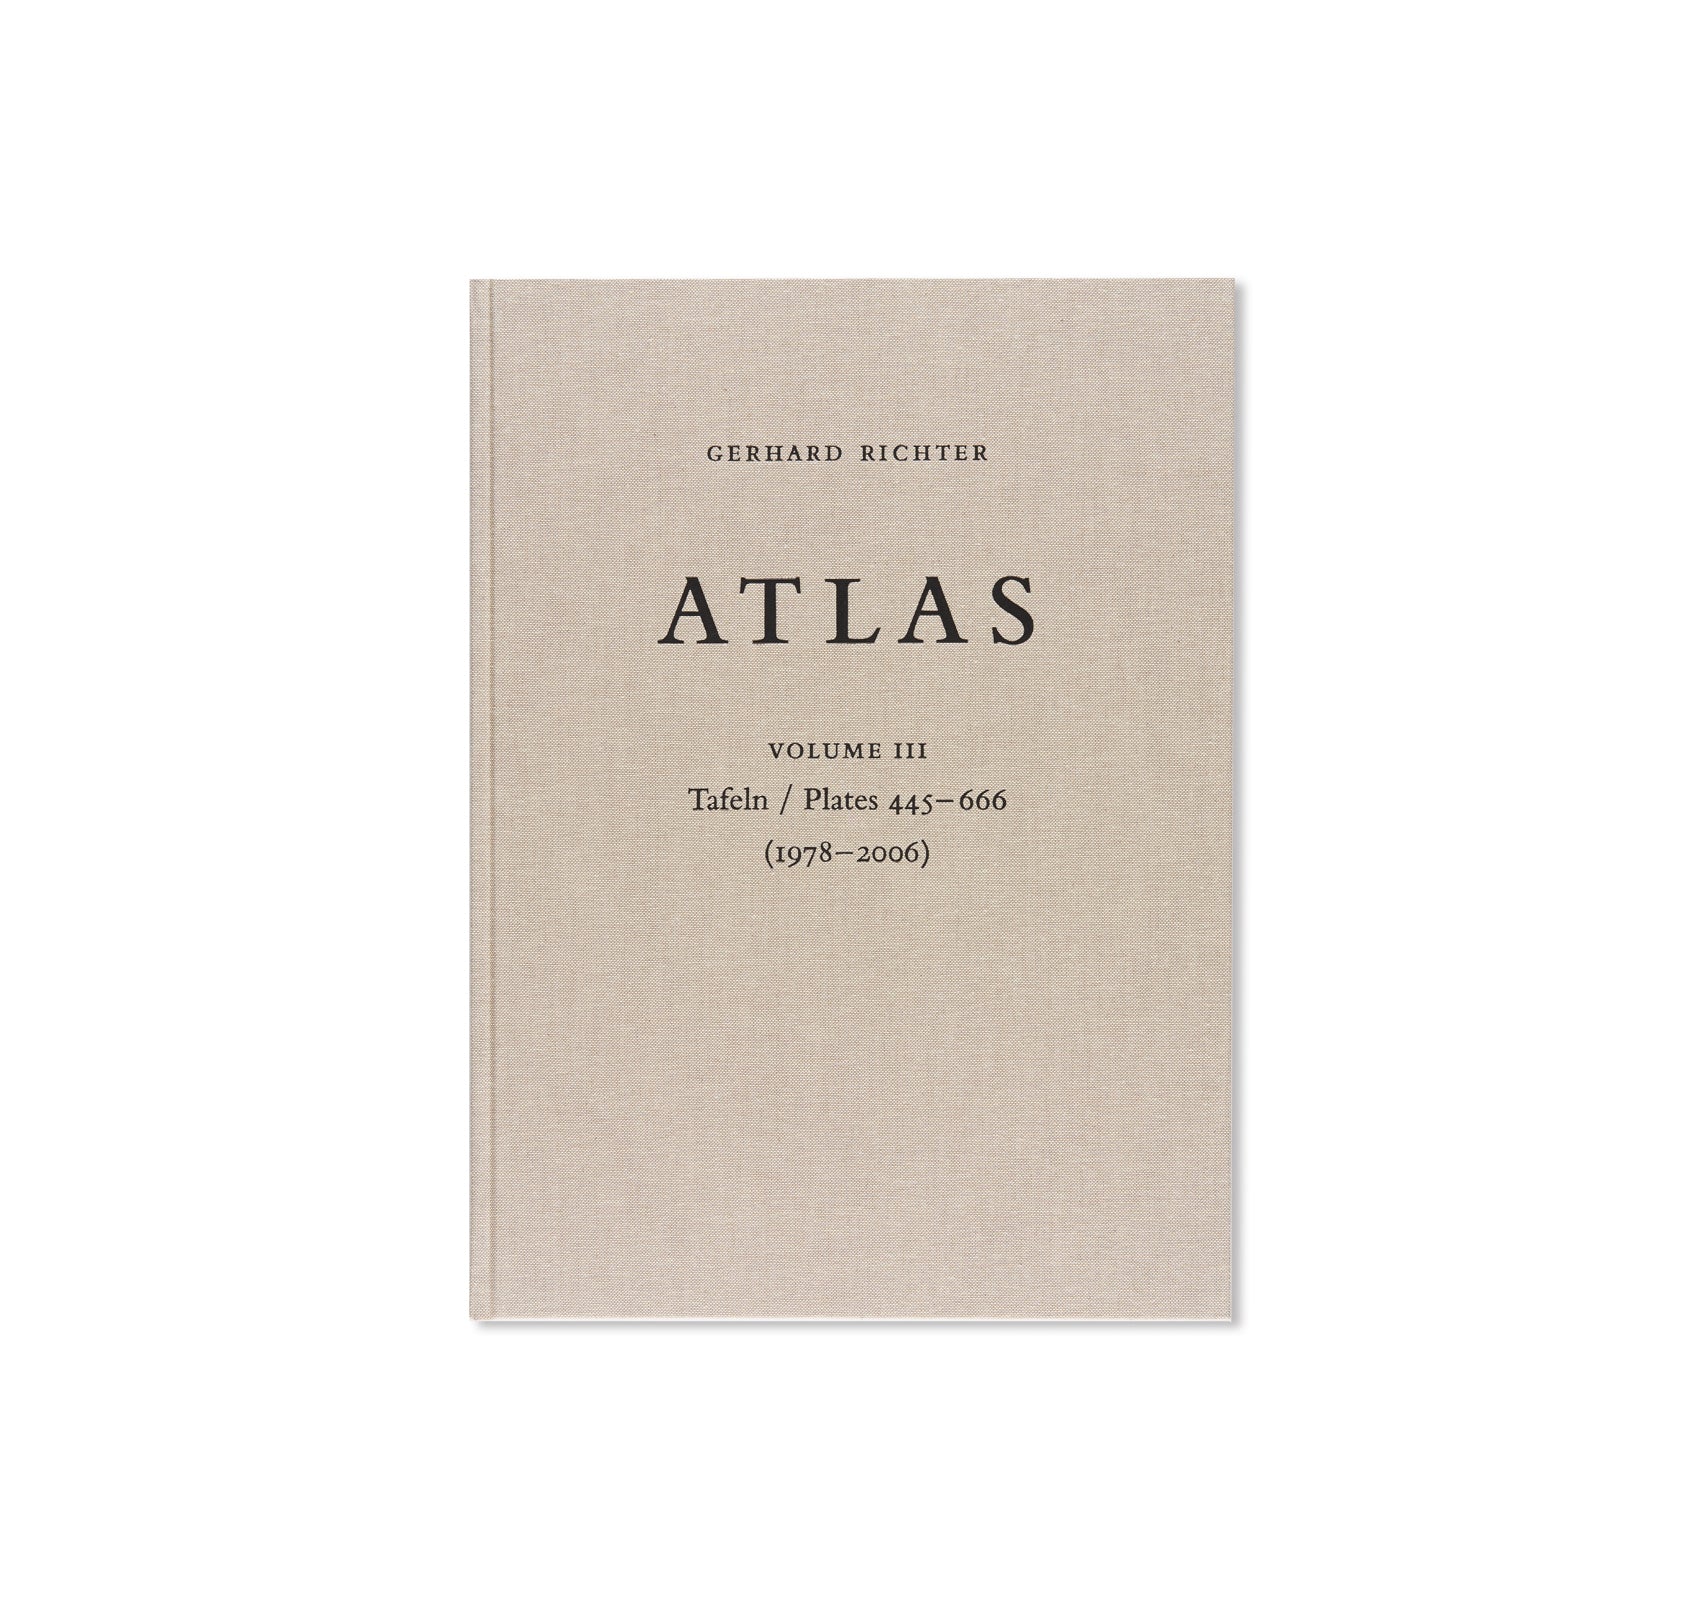 ATLAS by Gerhard Richter